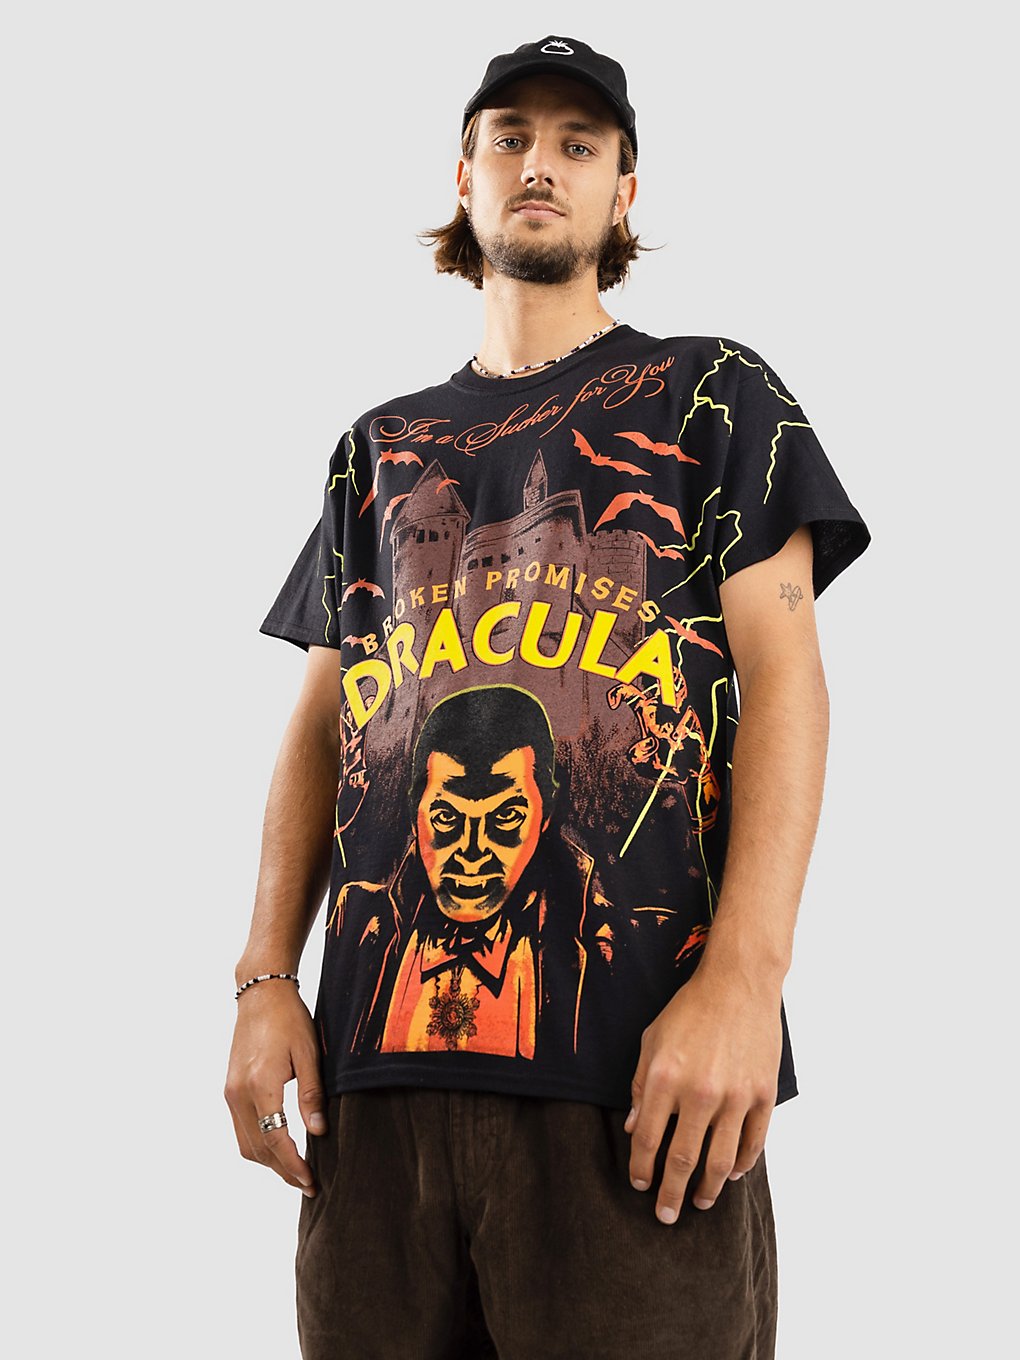 Broken Promises Dracula Sucker For You T-Shirt black kaufen